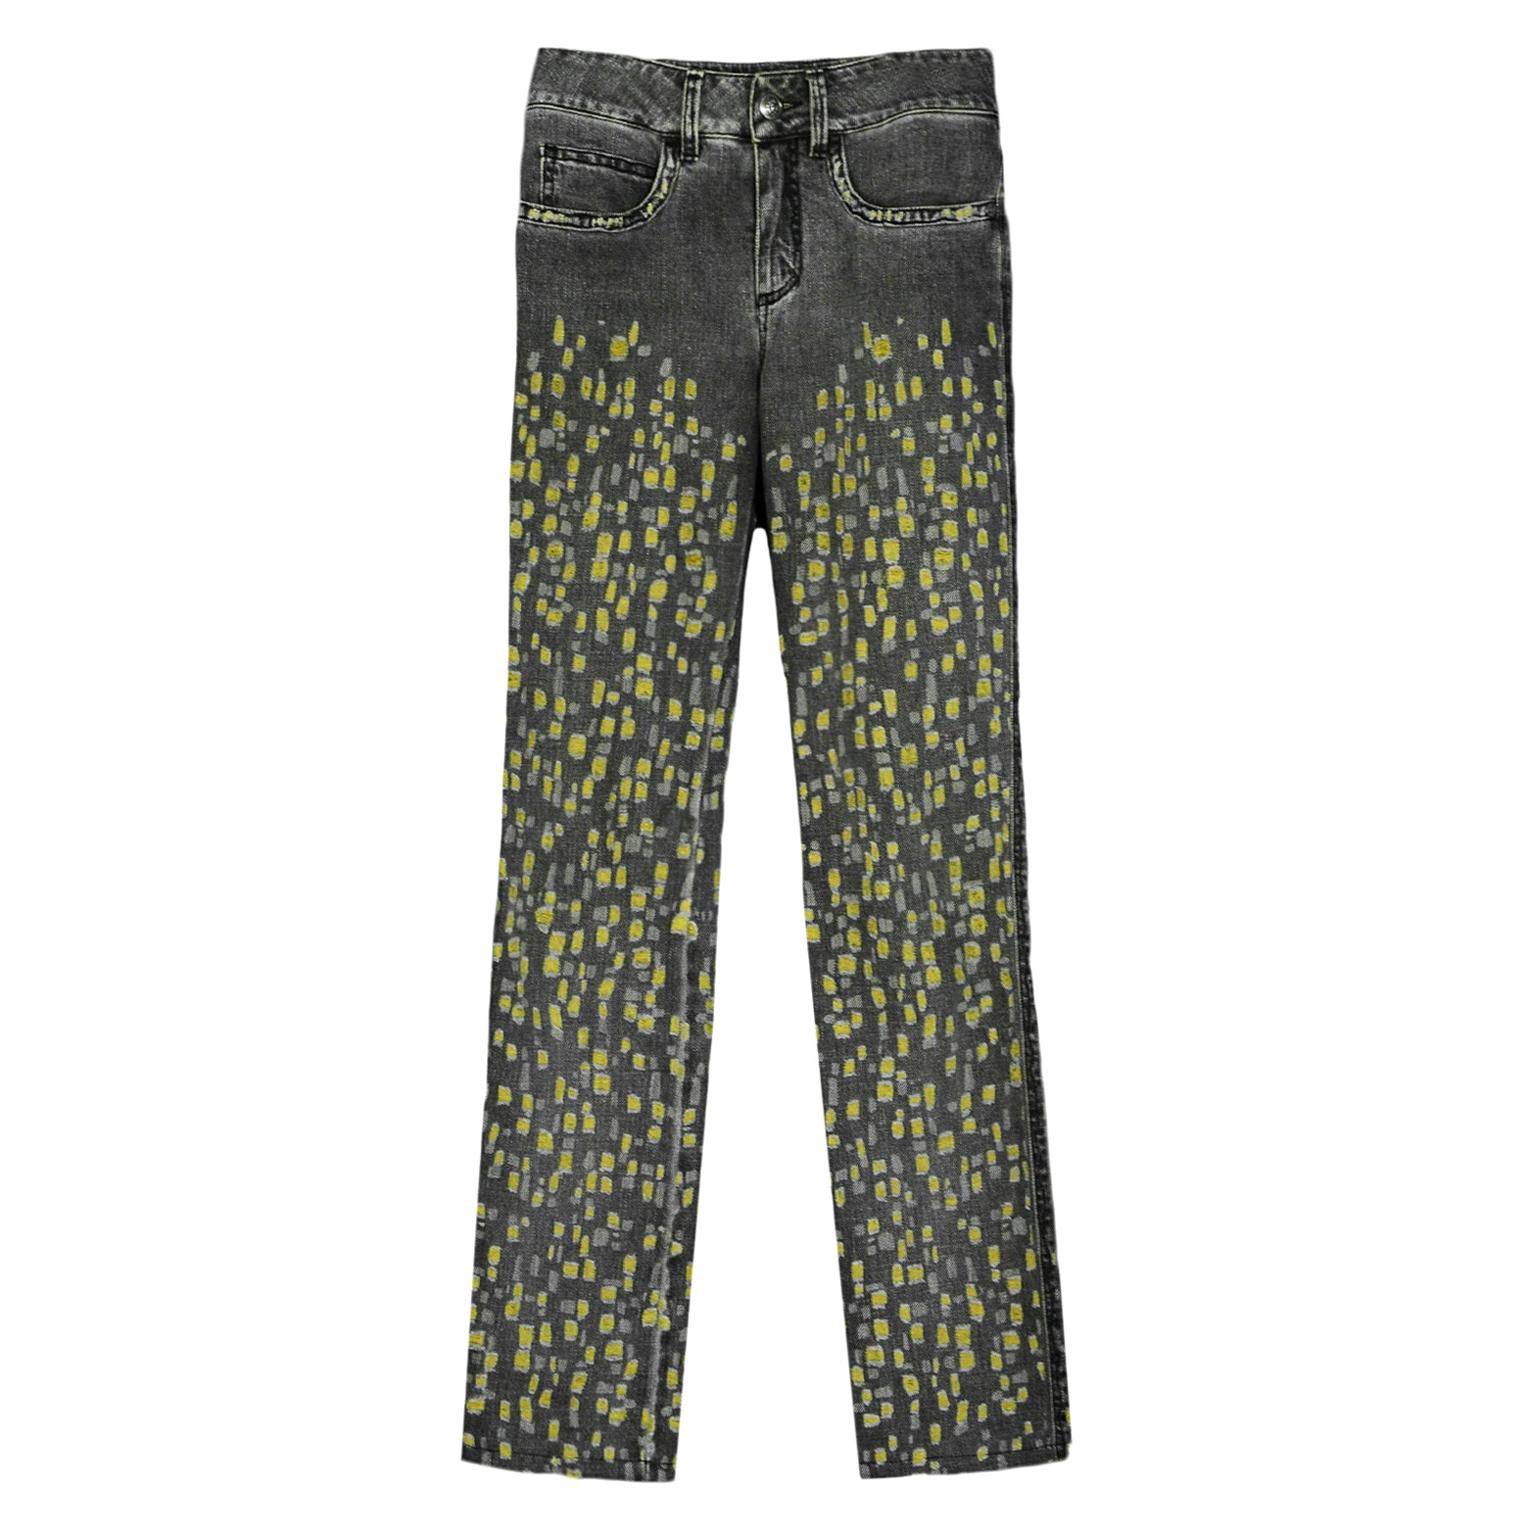 Chanel Grey Denim Jeans w/ Yellow Distressing sz FR34